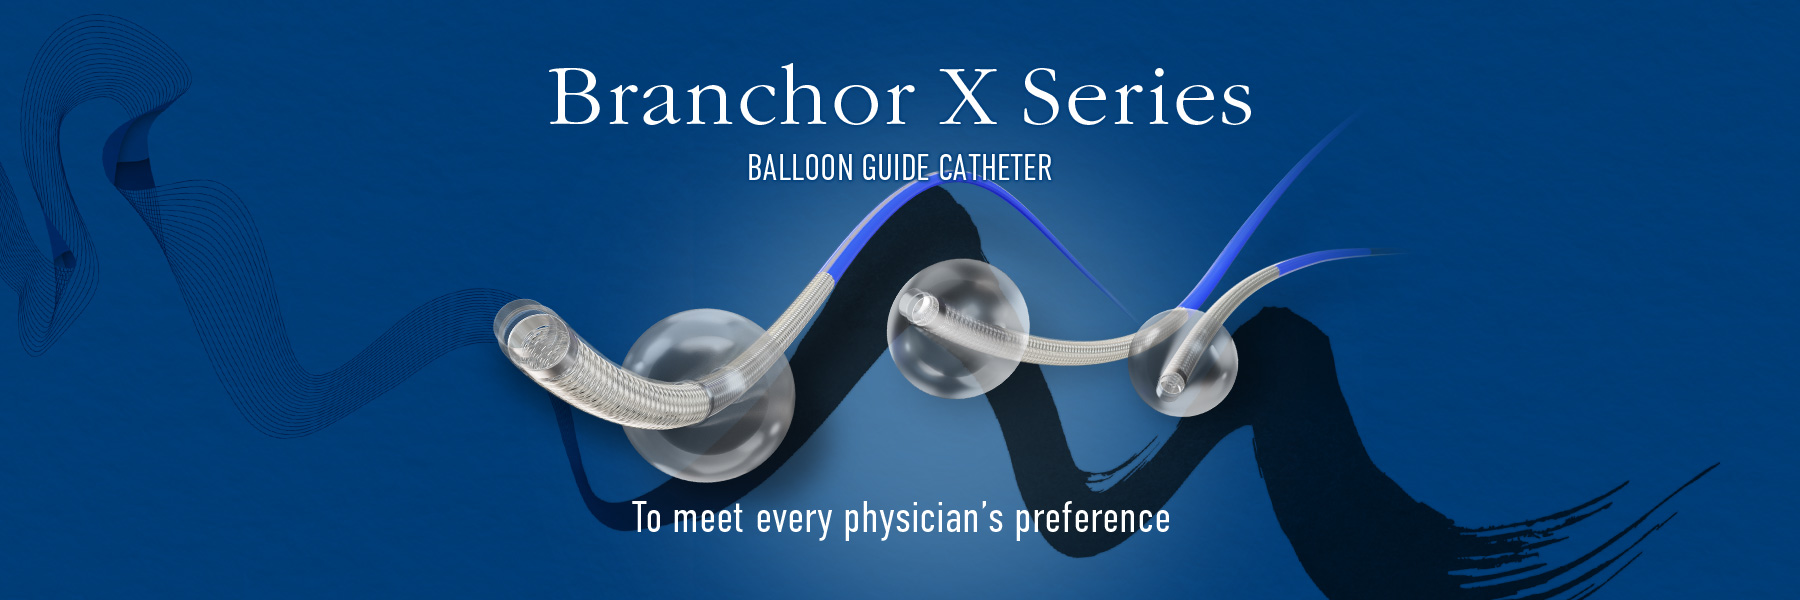 Branchor X Series